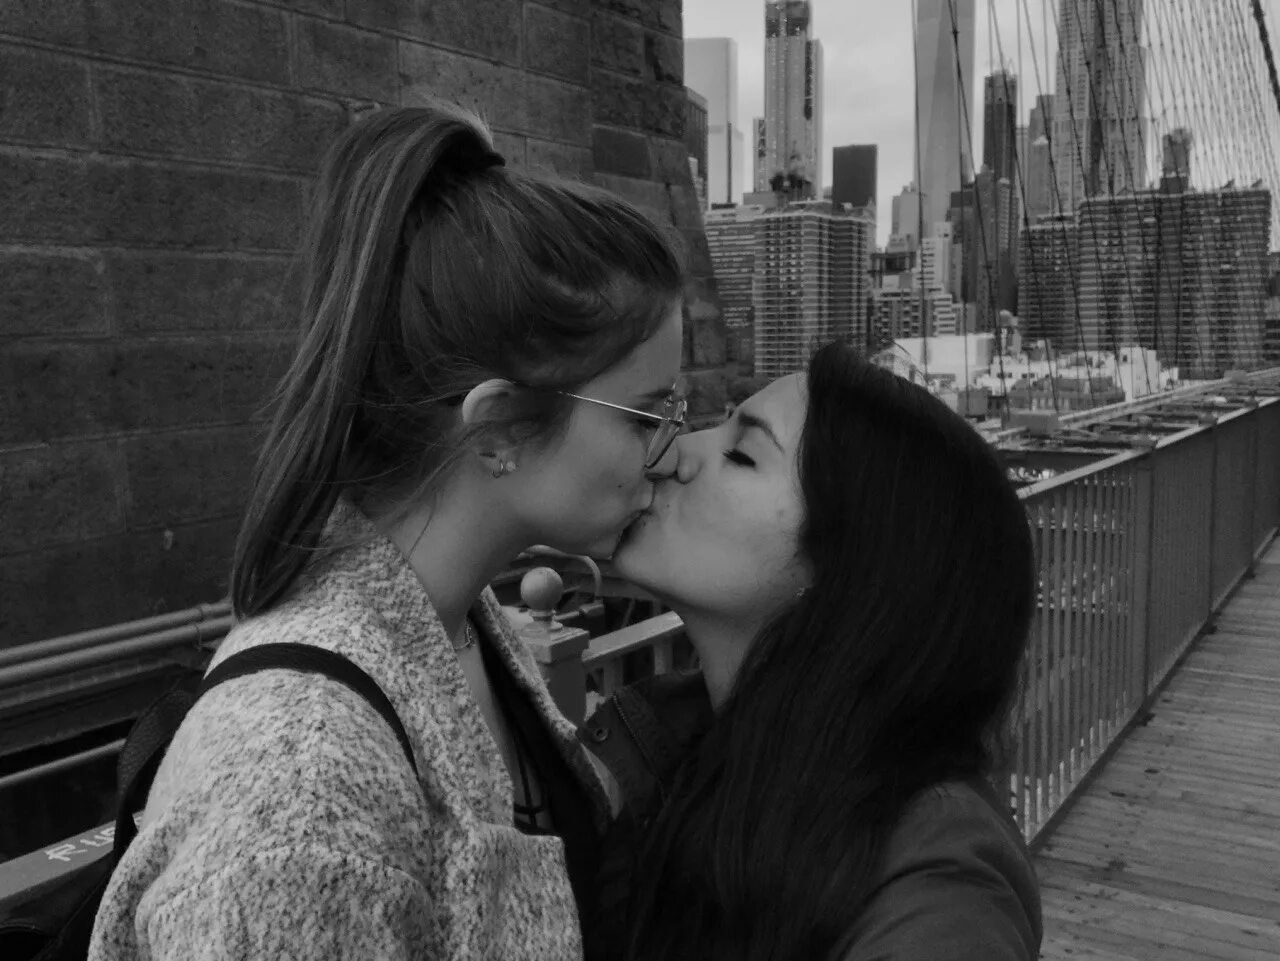 Lesbian 2020. Поцелуй девушек. Девушки целуются. Поцелуй девушки с девушкой. Поцелуй двух девушек.